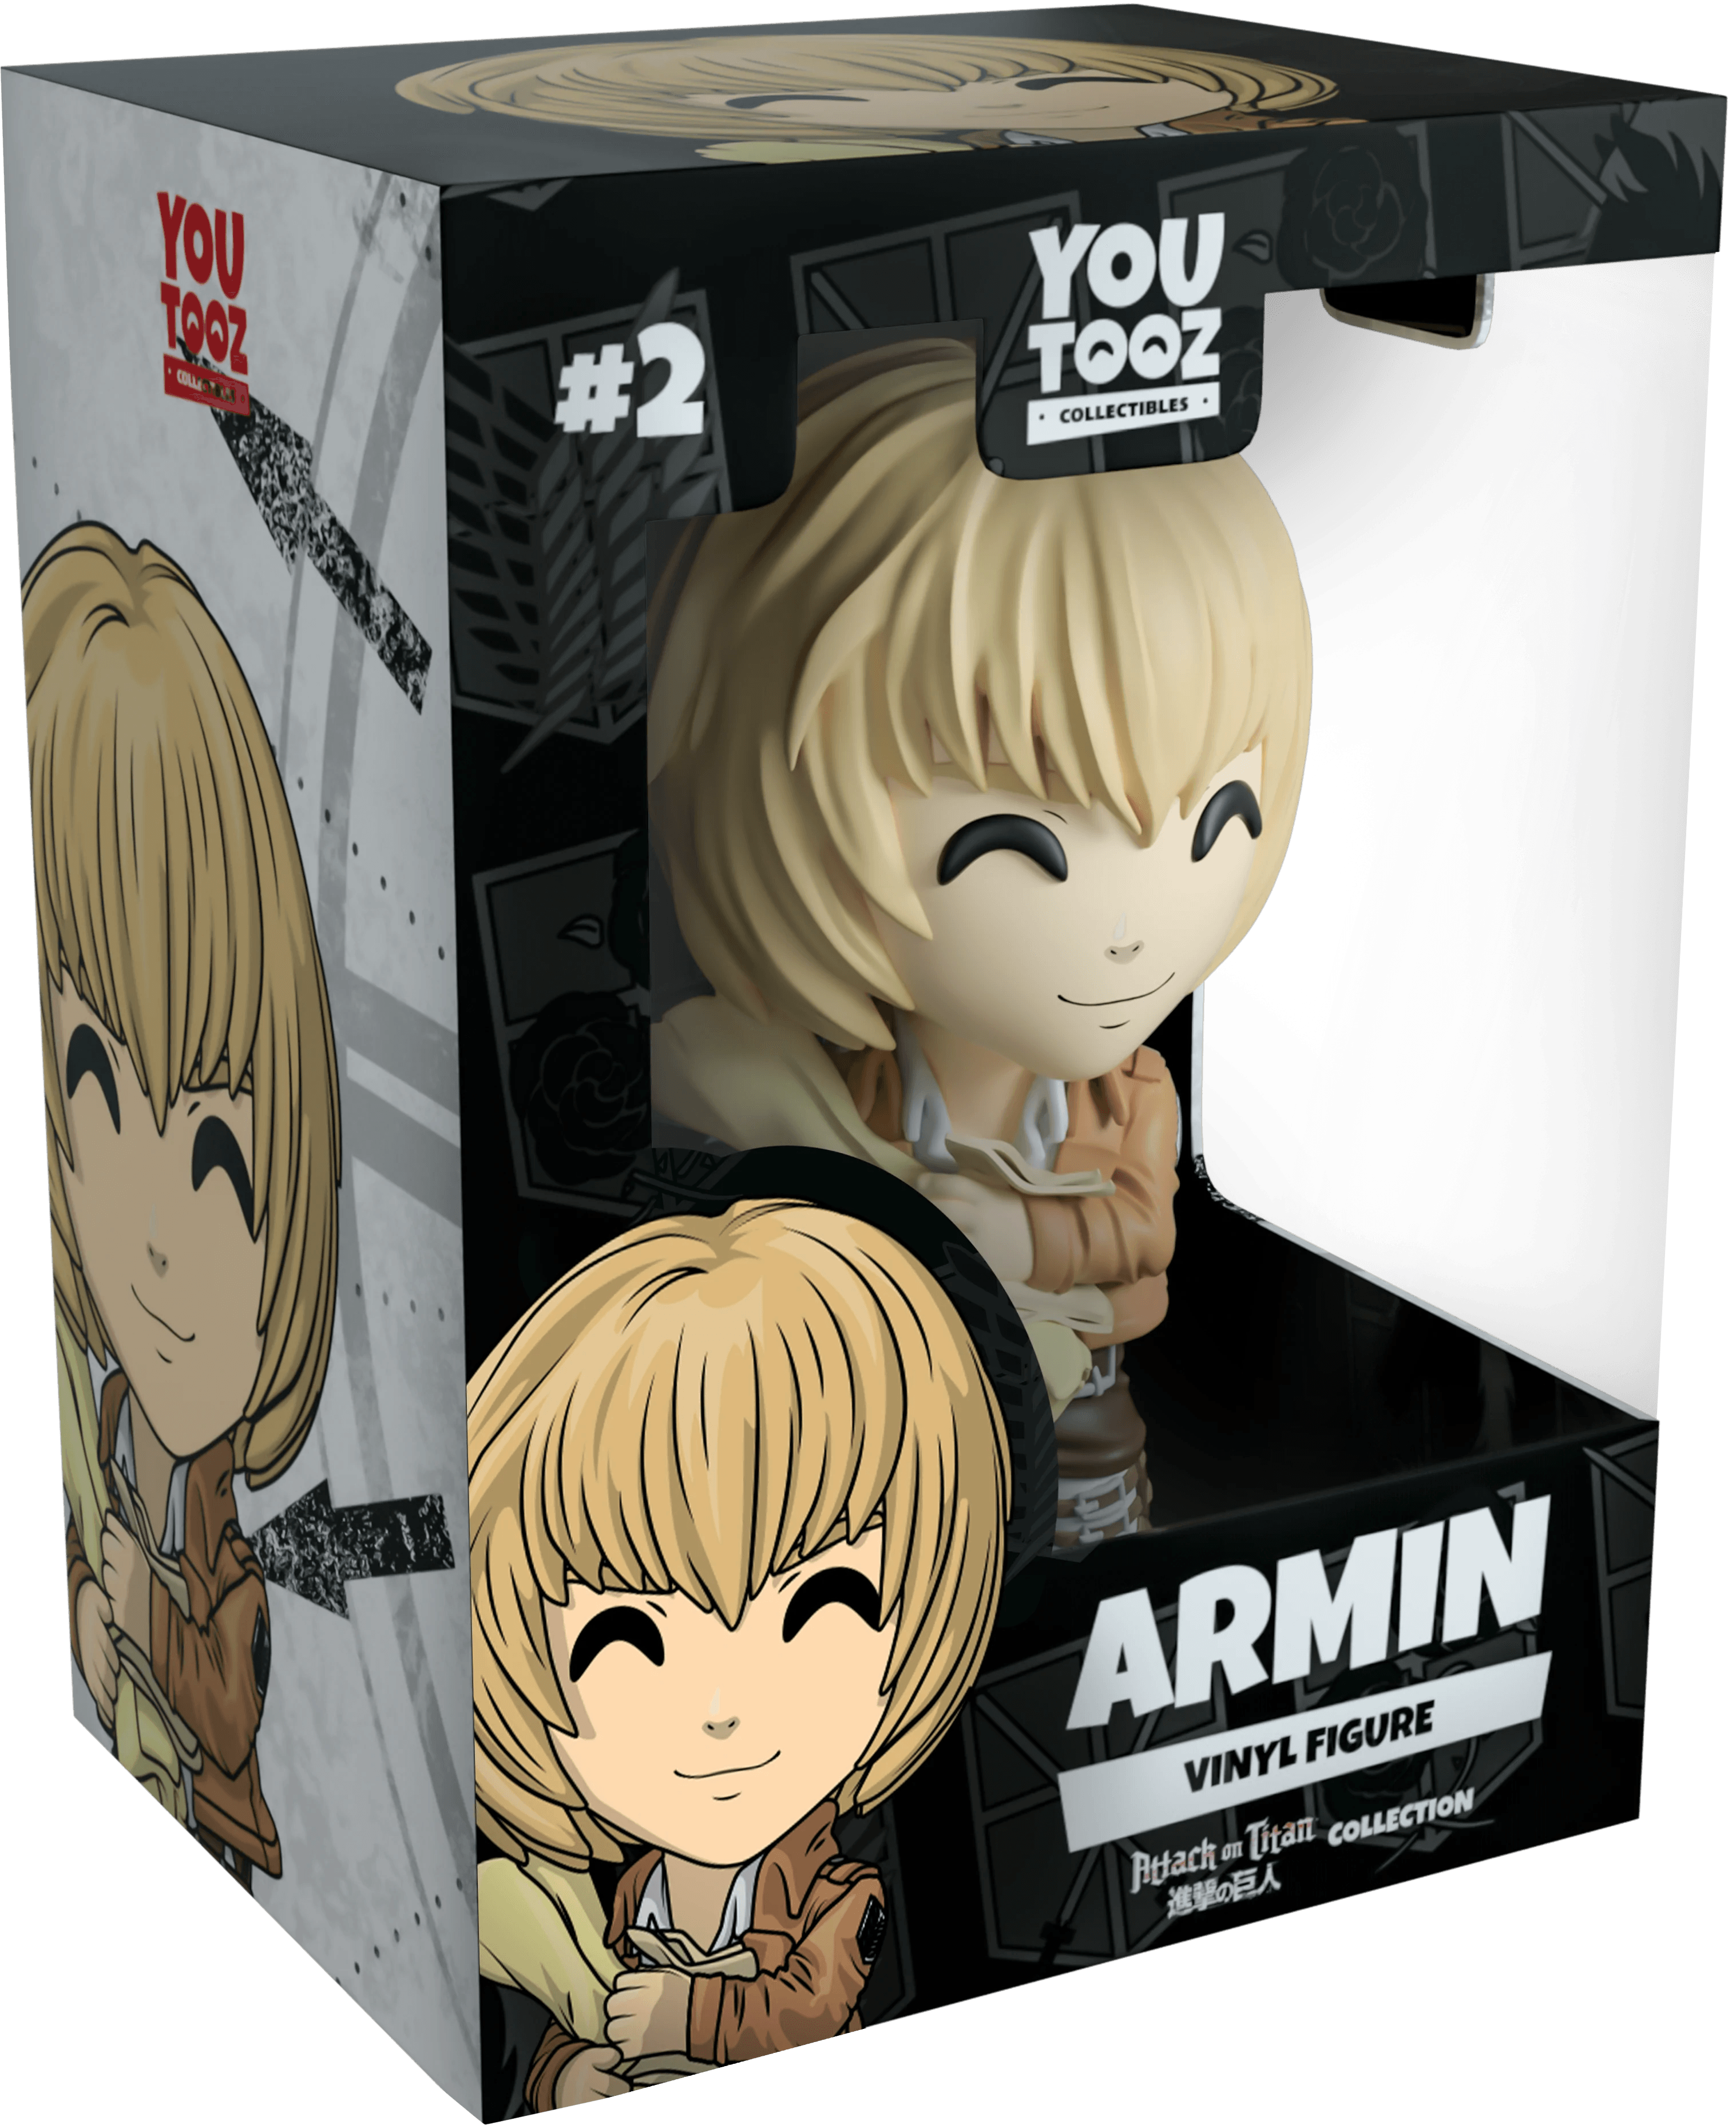 Youtooz - Attack on Titan - Armin Vinyl Figure #2 - The Card Vault